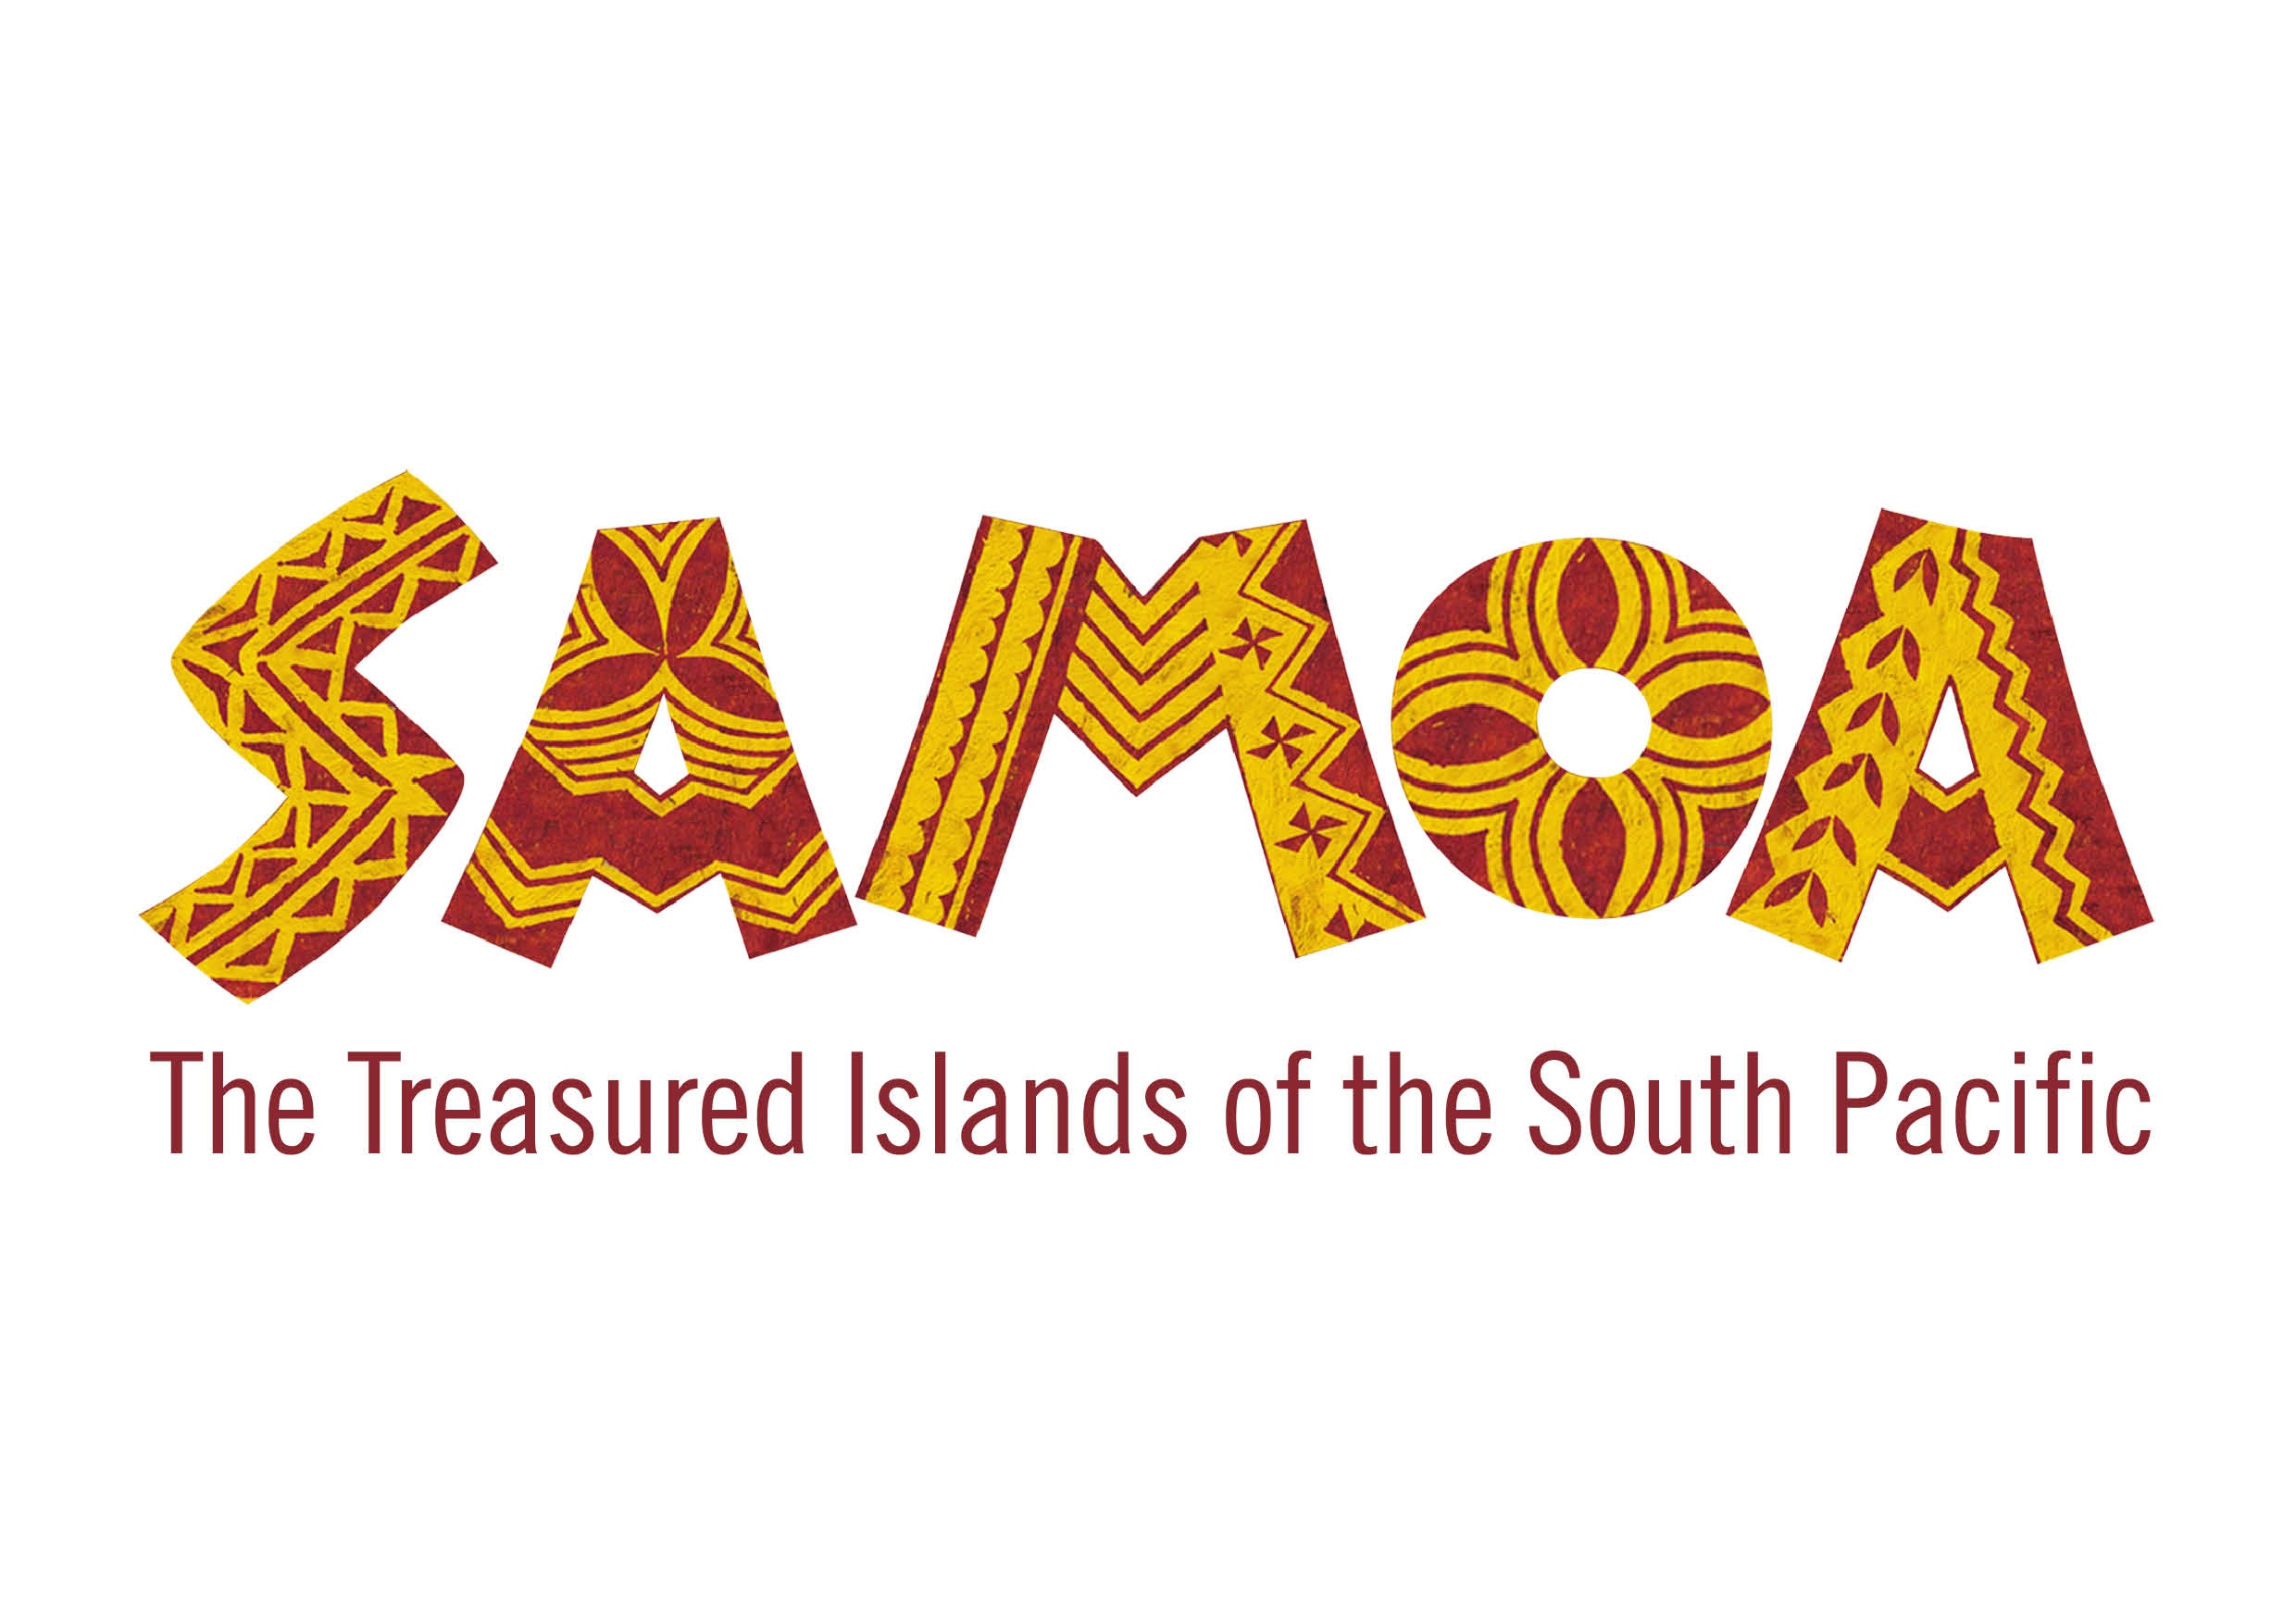 SAMOA SPECIALIST